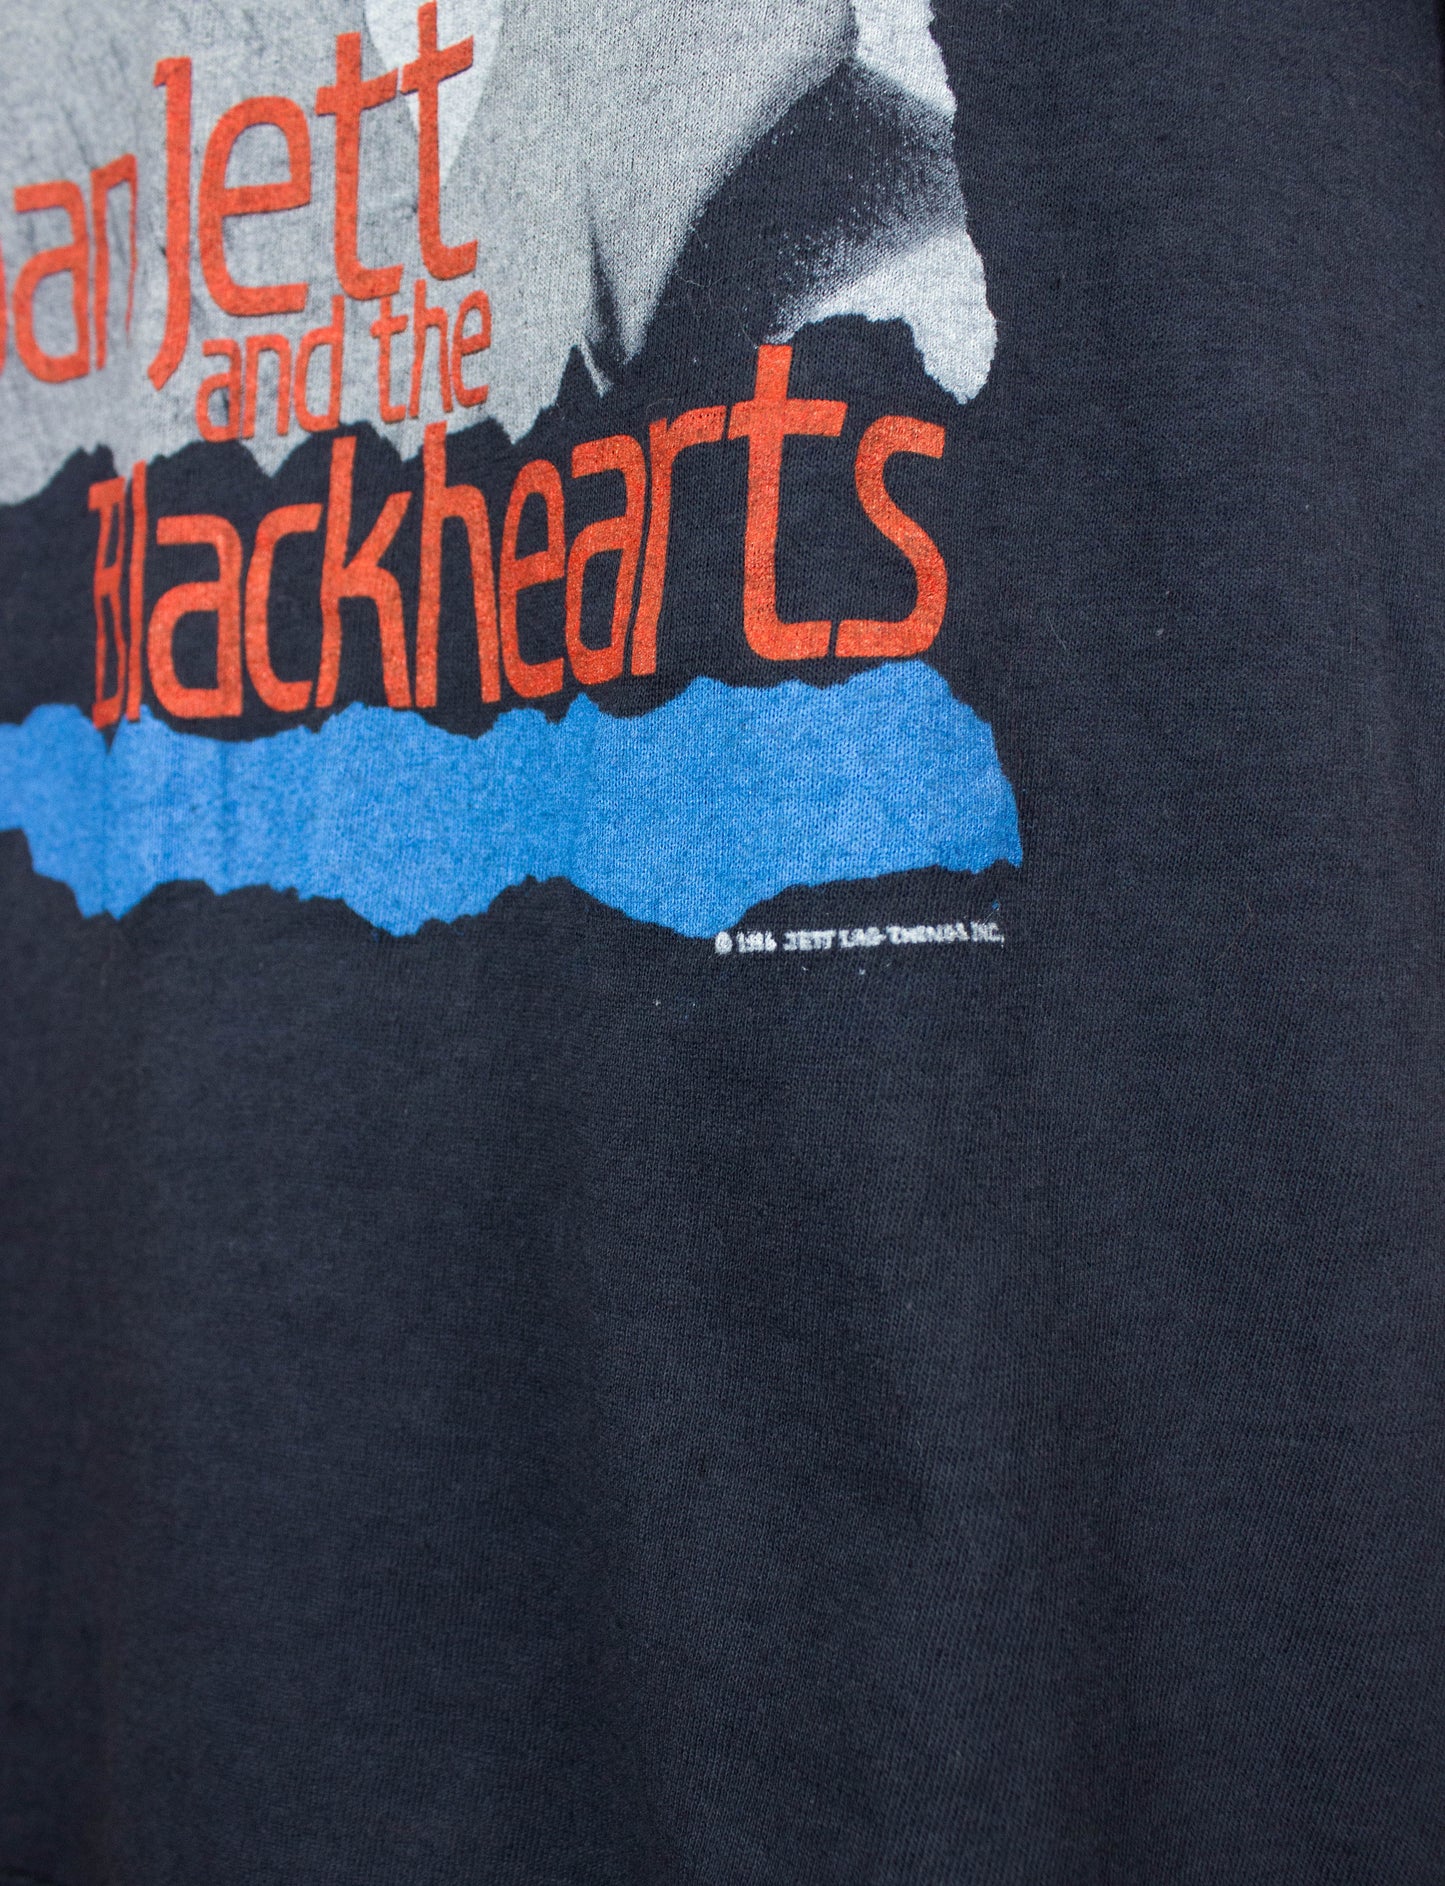 Vintage Joan Jett and the Blackhearts Concert T Shirt 1986 World Tour V Black Medium